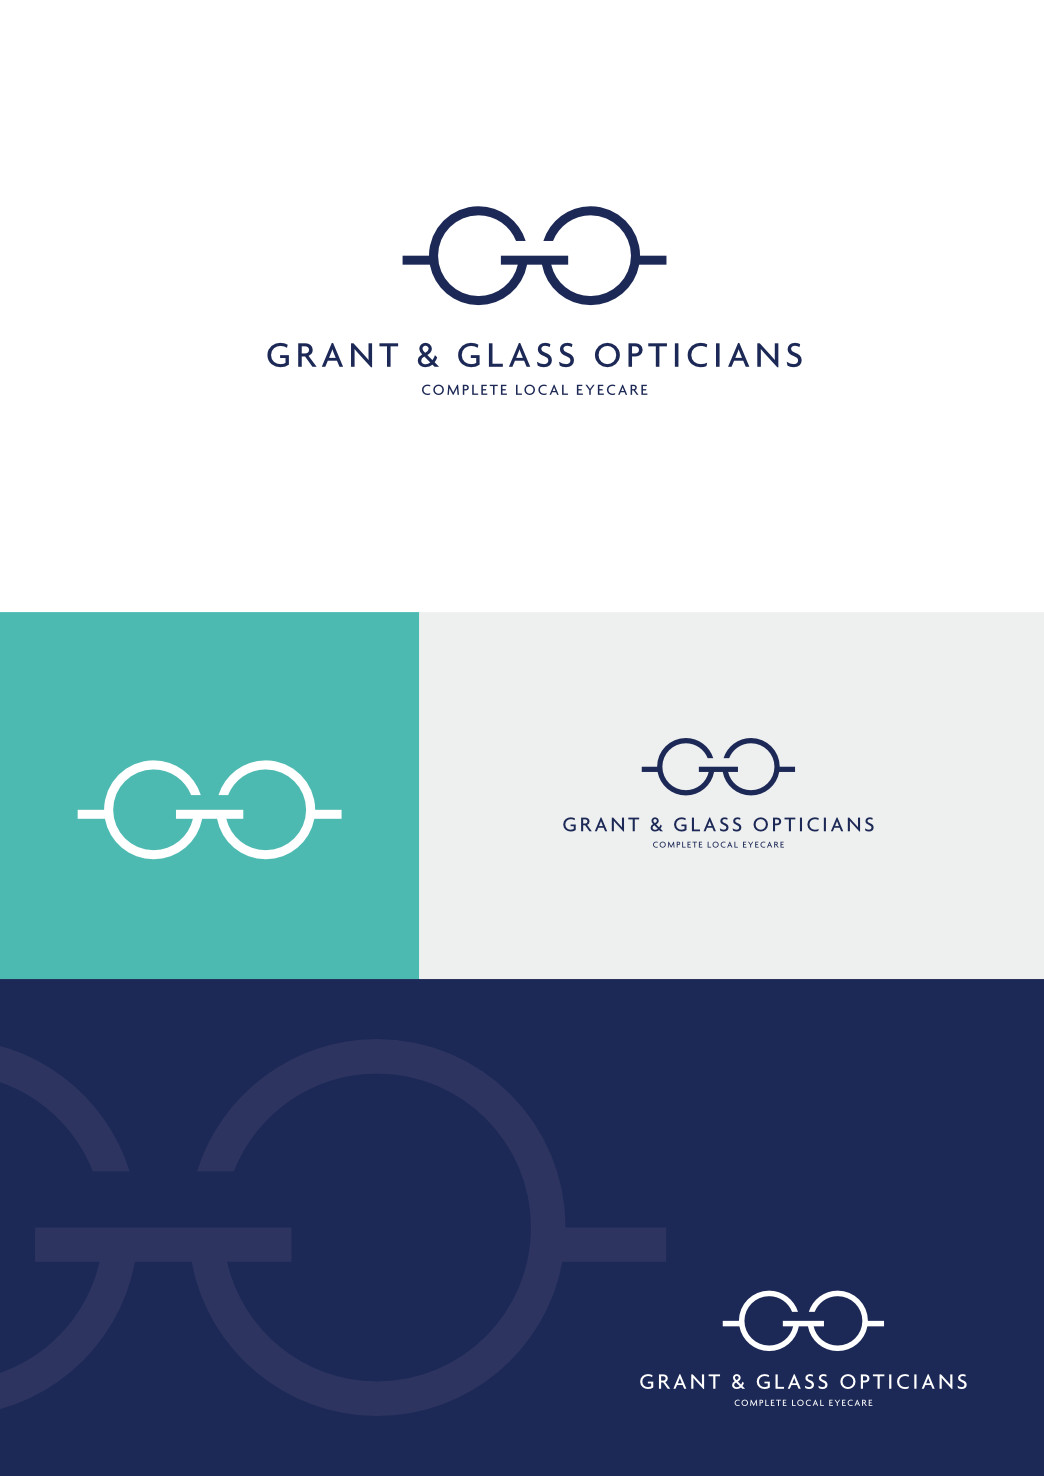 Grant & Glass Opticians